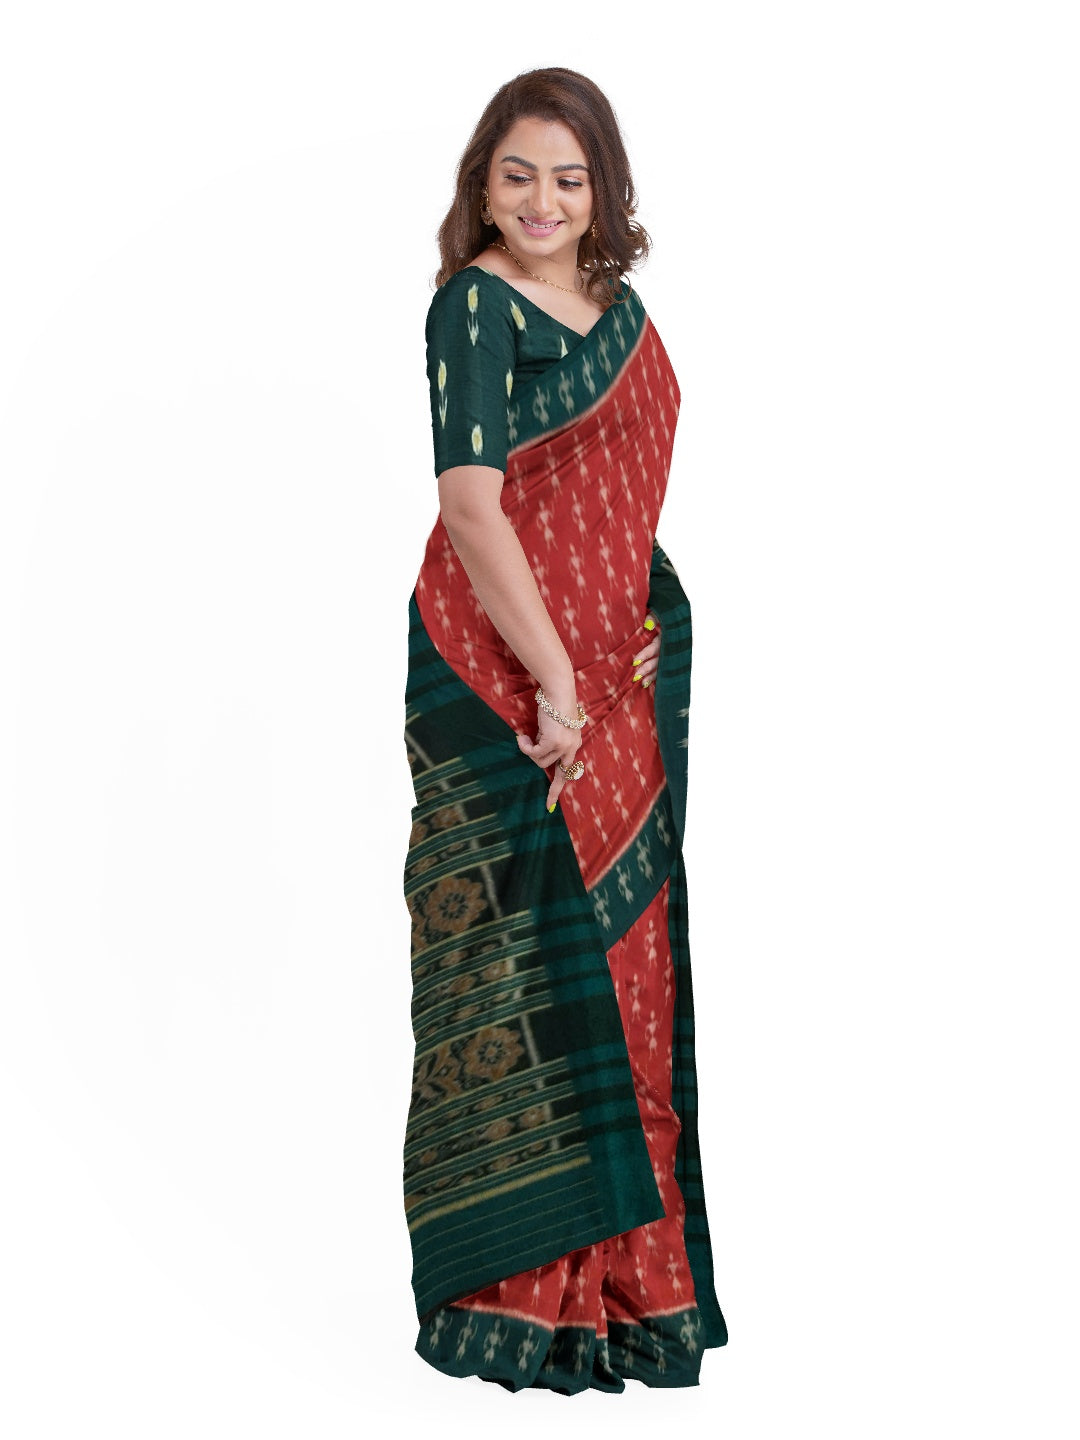 Red and Green Sambalpuri Cotton Saree with matching Sambalpuri cotton blouse